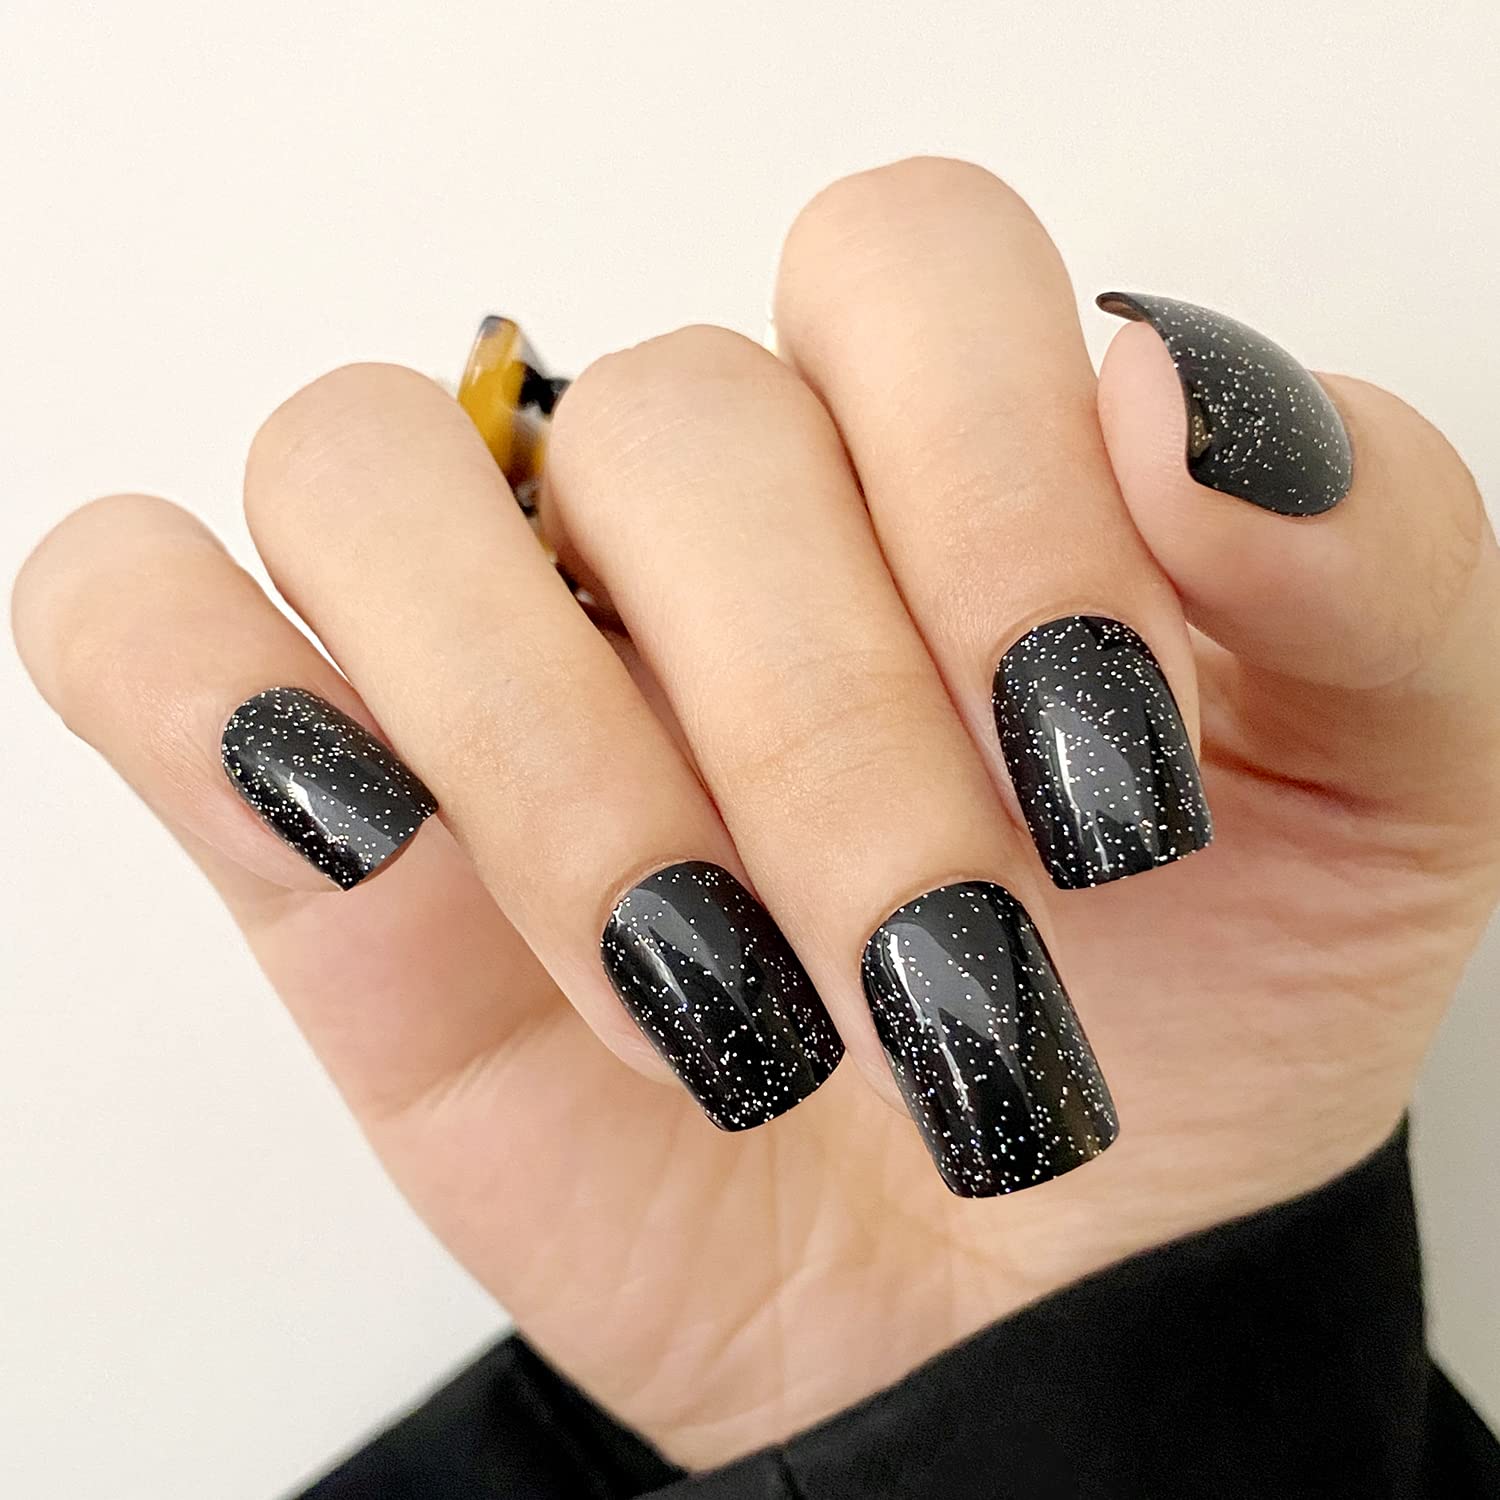 Into the Black Nail Polish - very special shimmery black